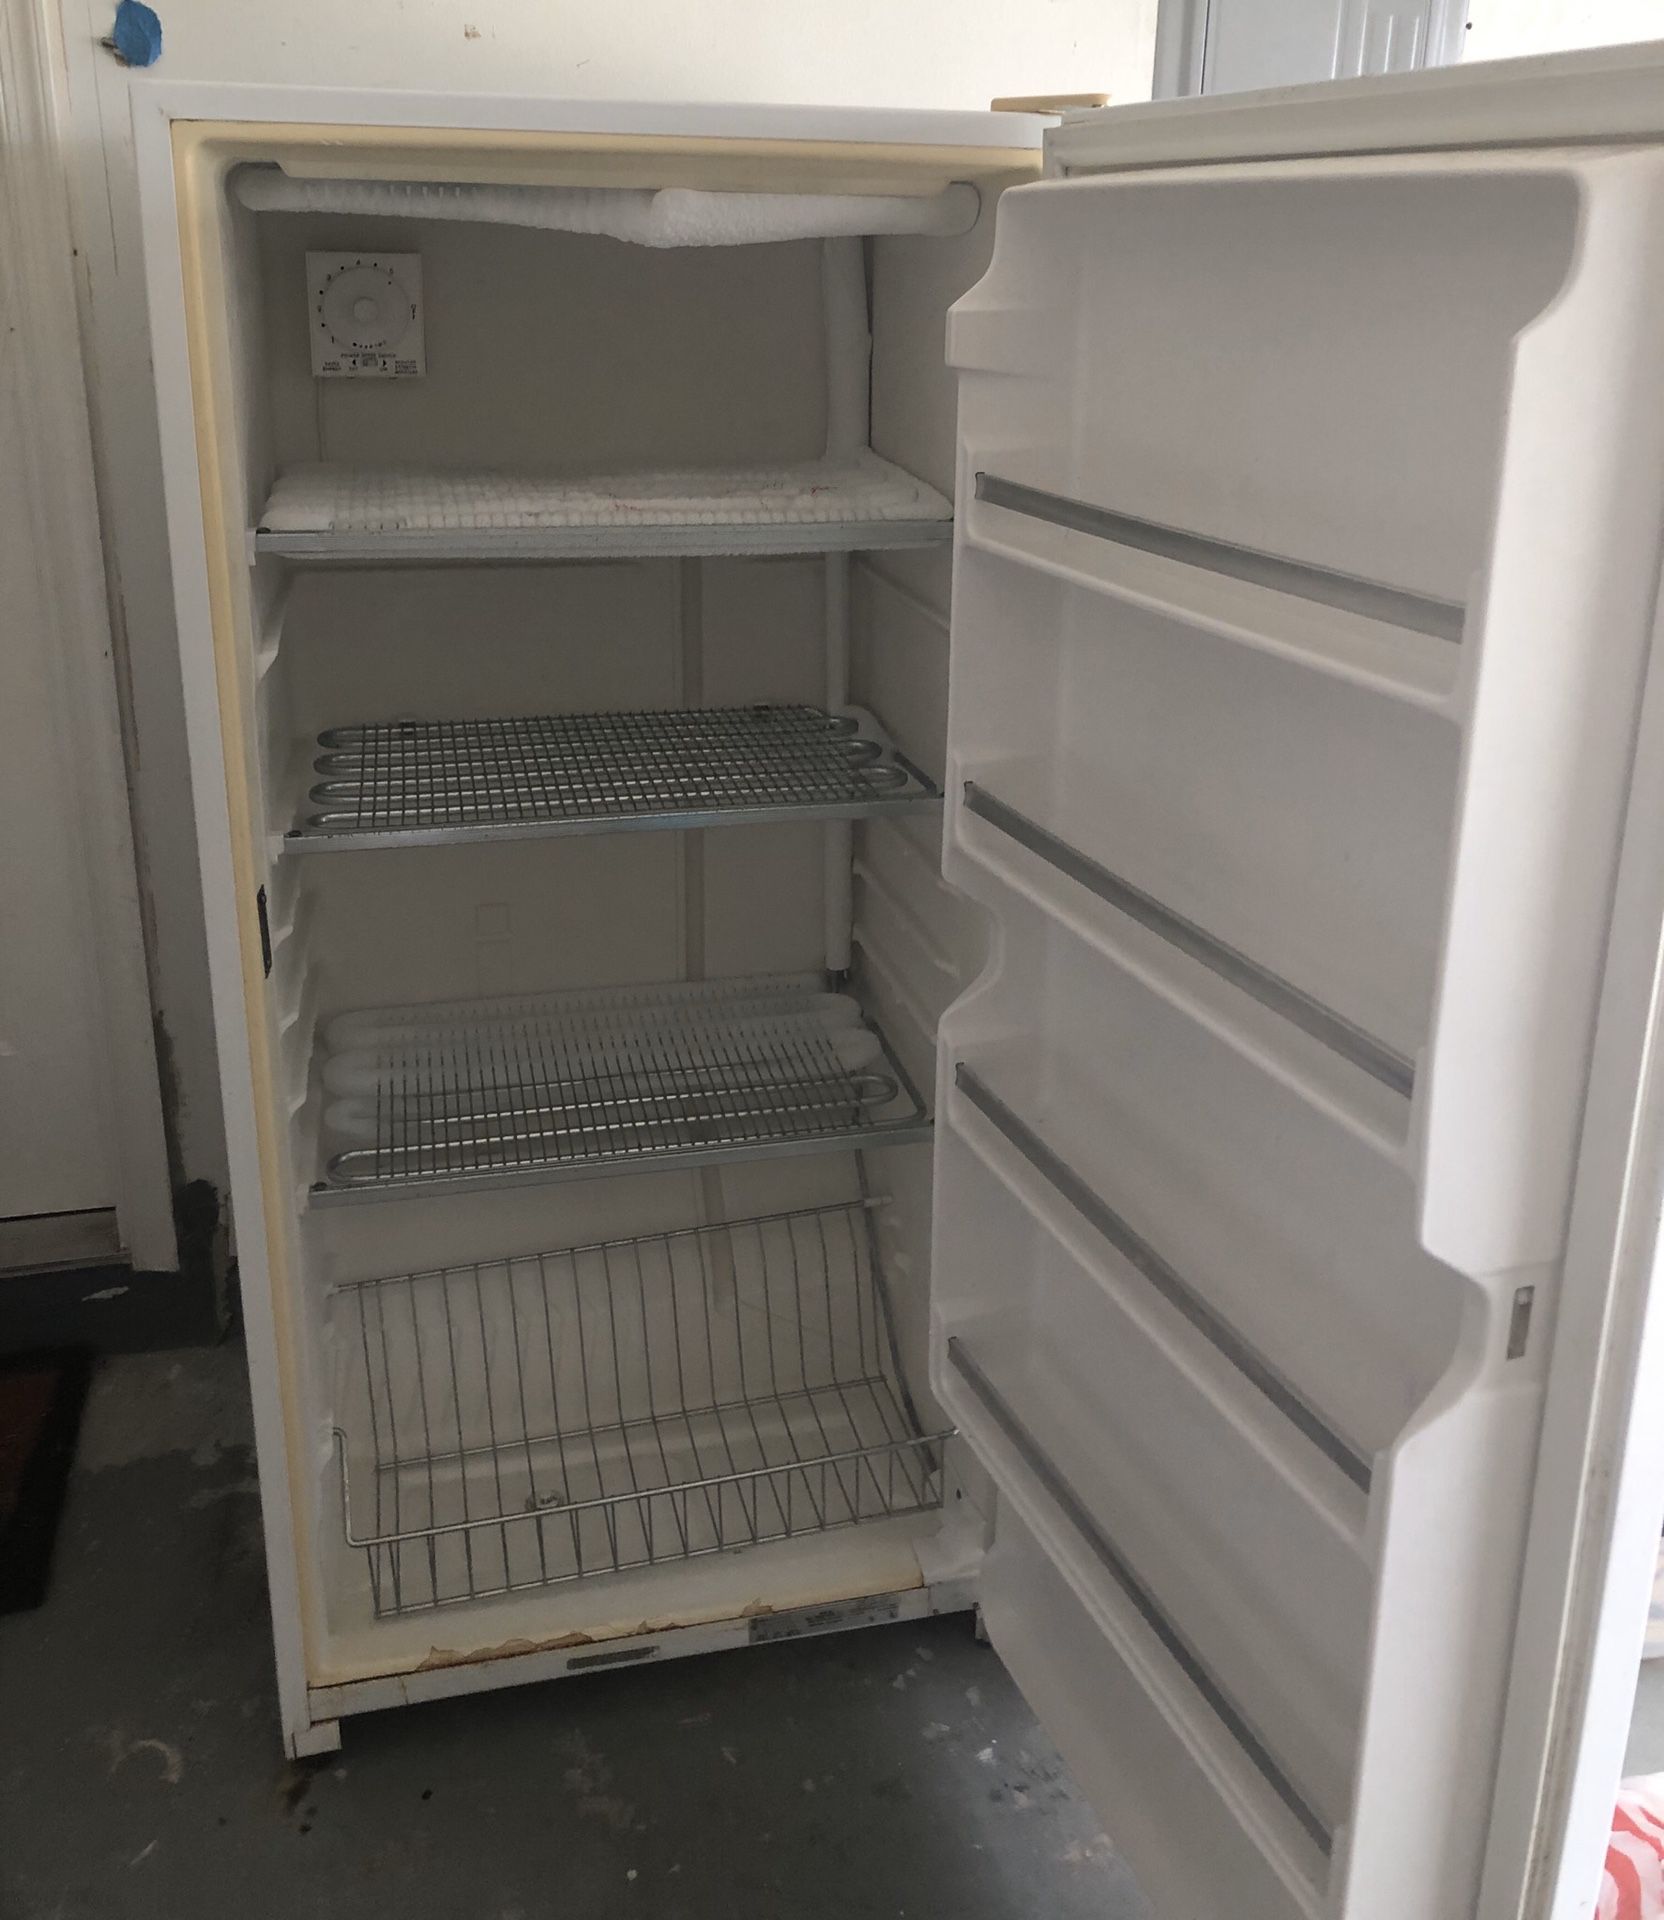 Kenmore upright freezer